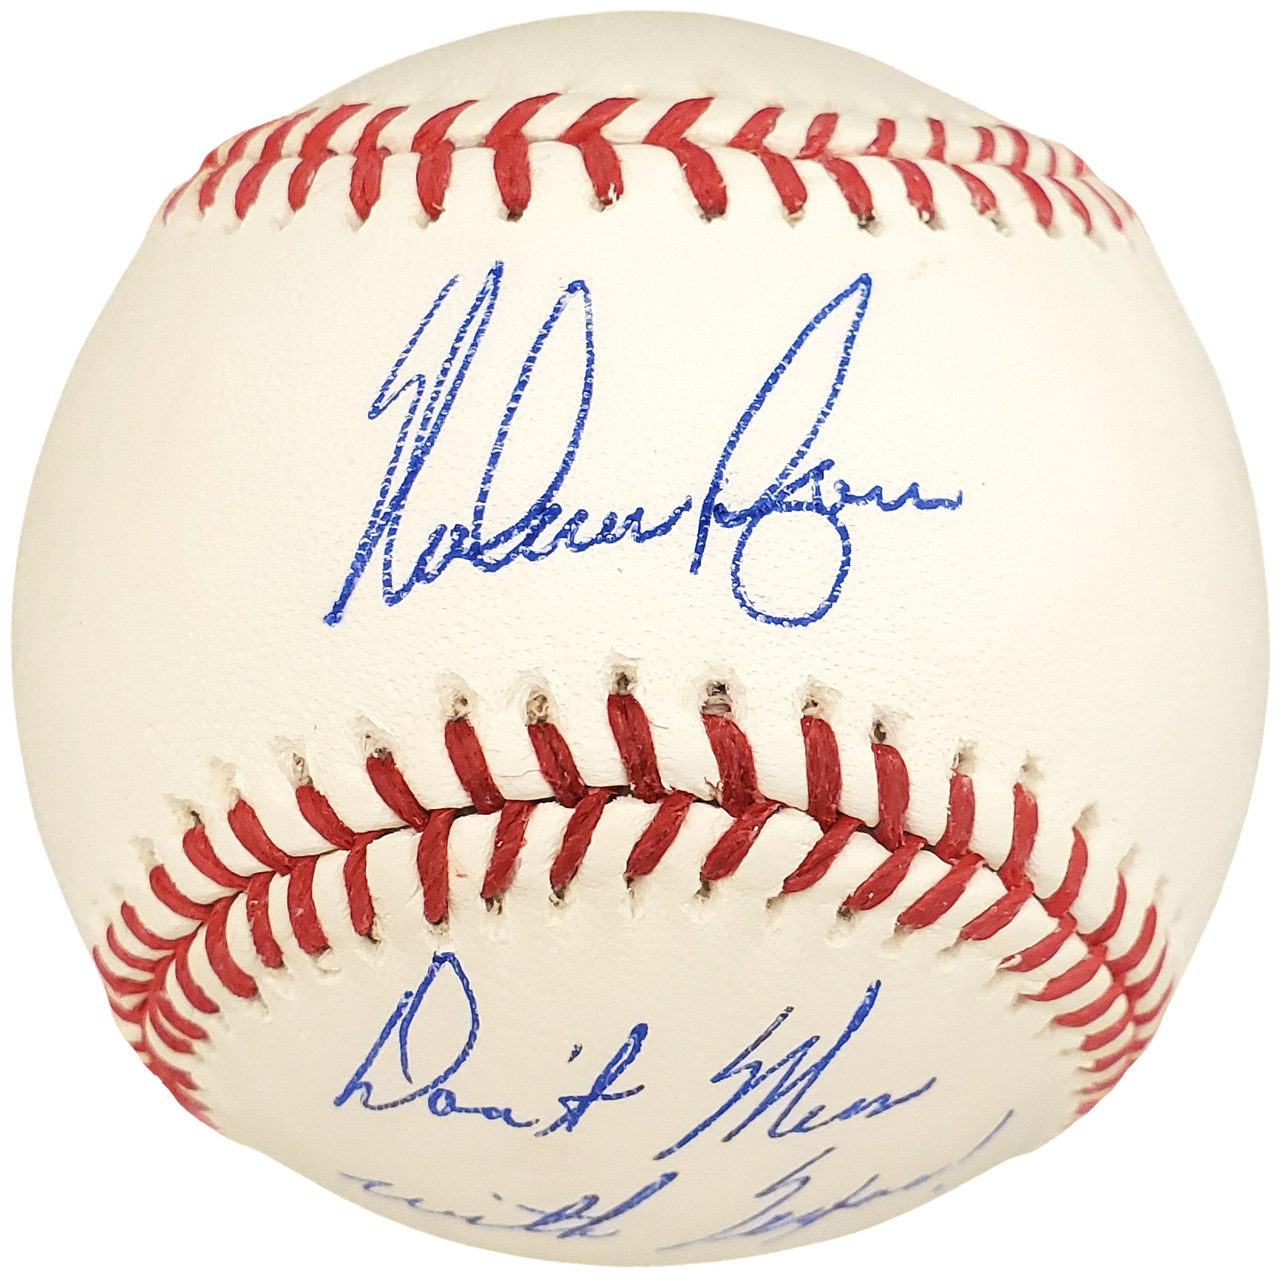 Autographed Major League Baseball – Nolan Ryan Foundation